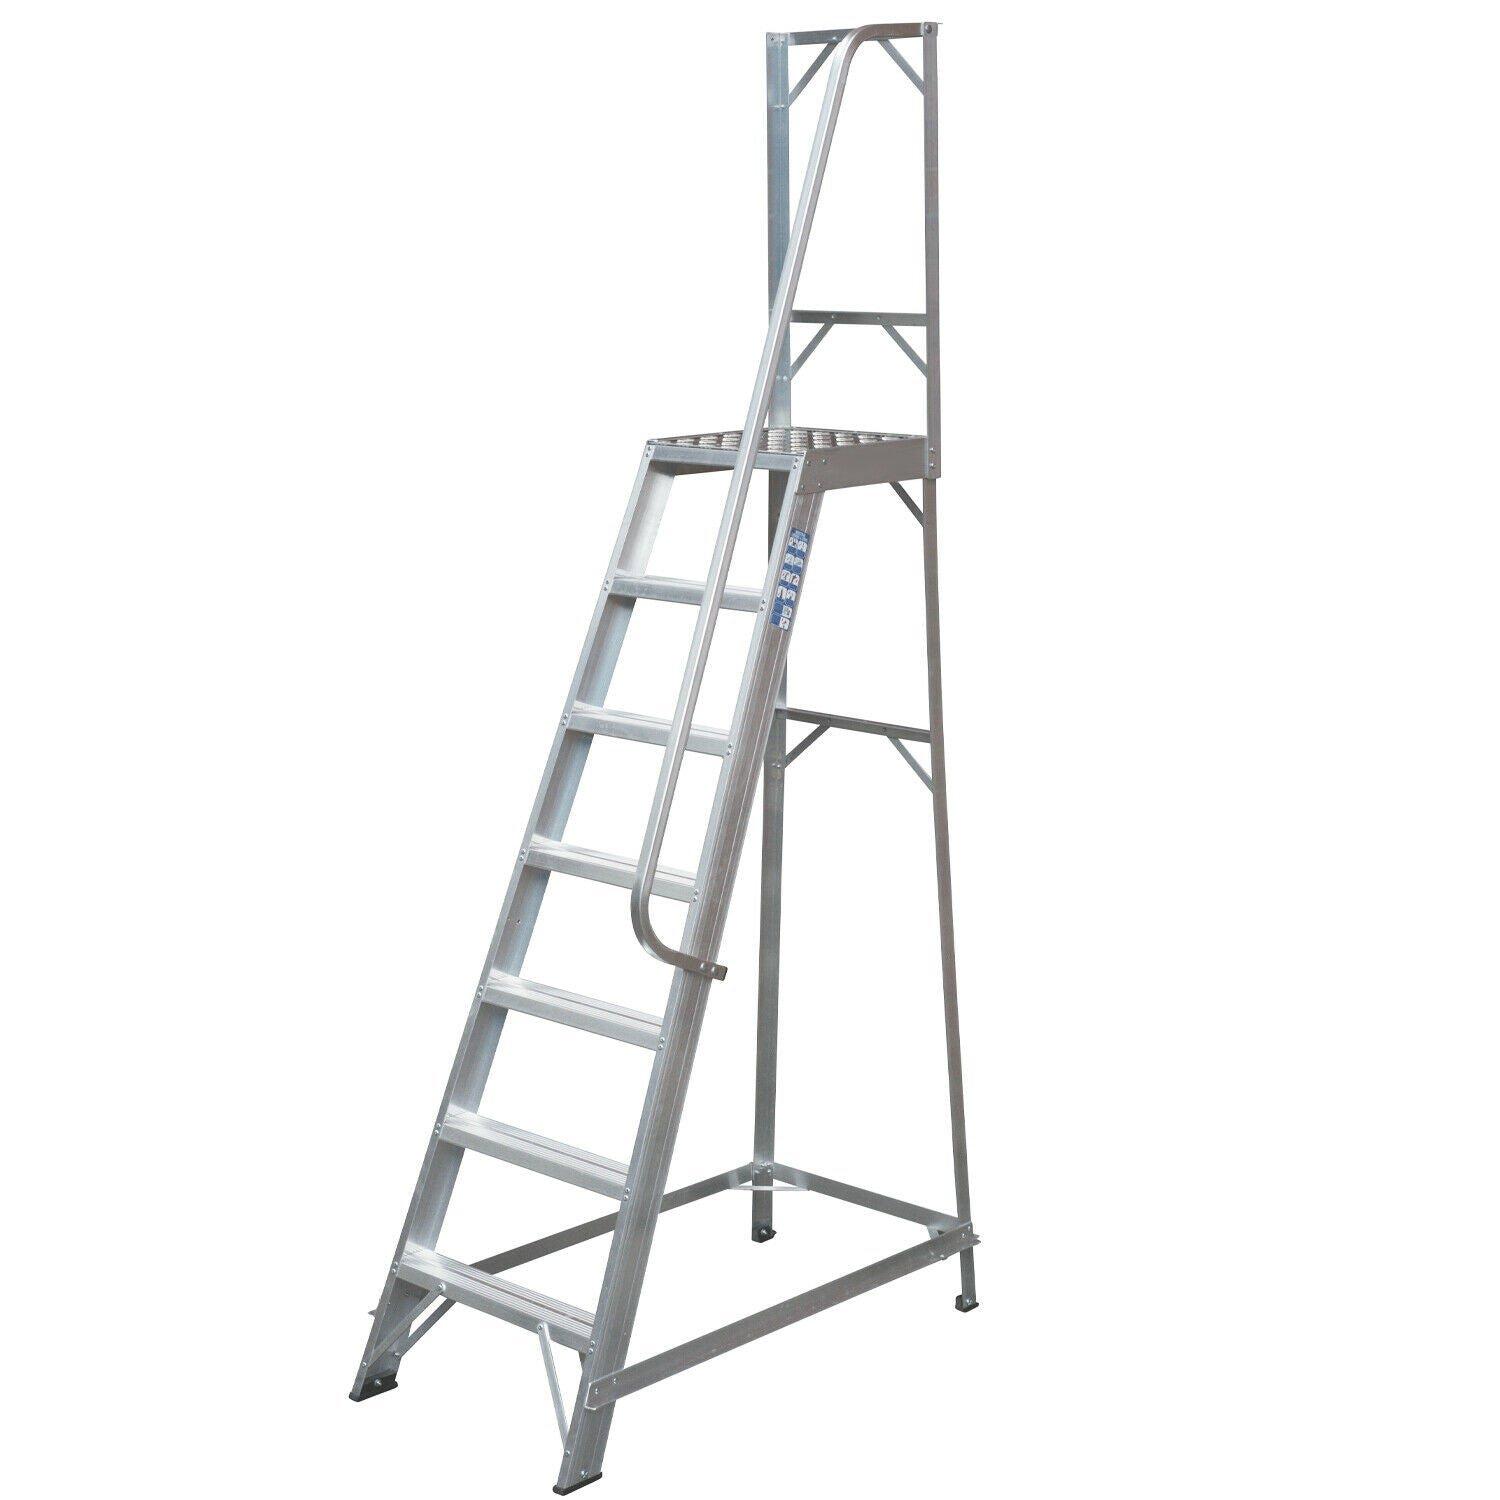 1.7m Heavy Duty Single Sided Fixed Step Ladders Handrail Platform Safety Barrier